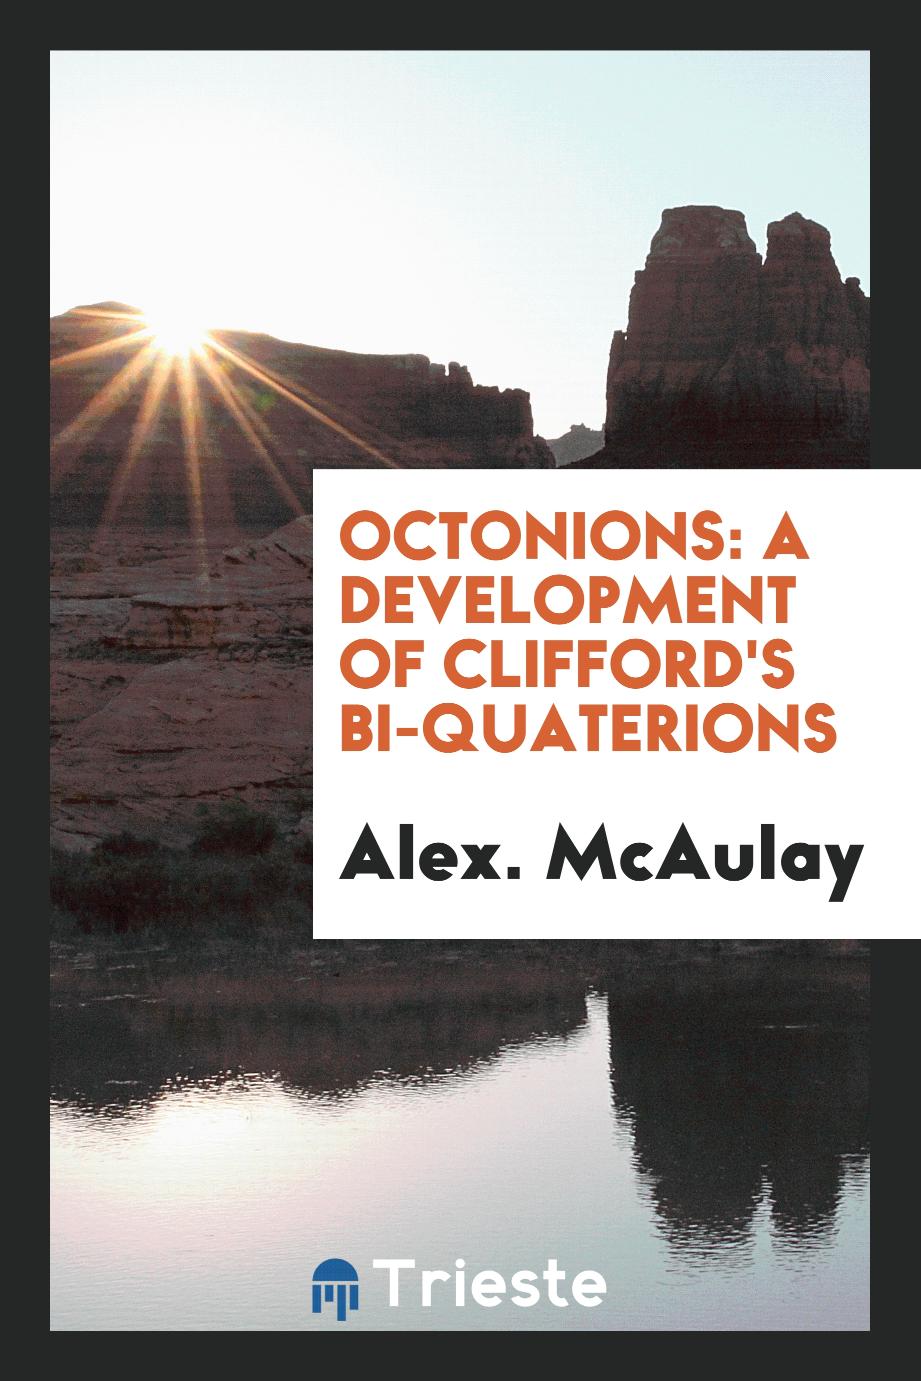 Octonions: a development of Clifford's bi-quaterions